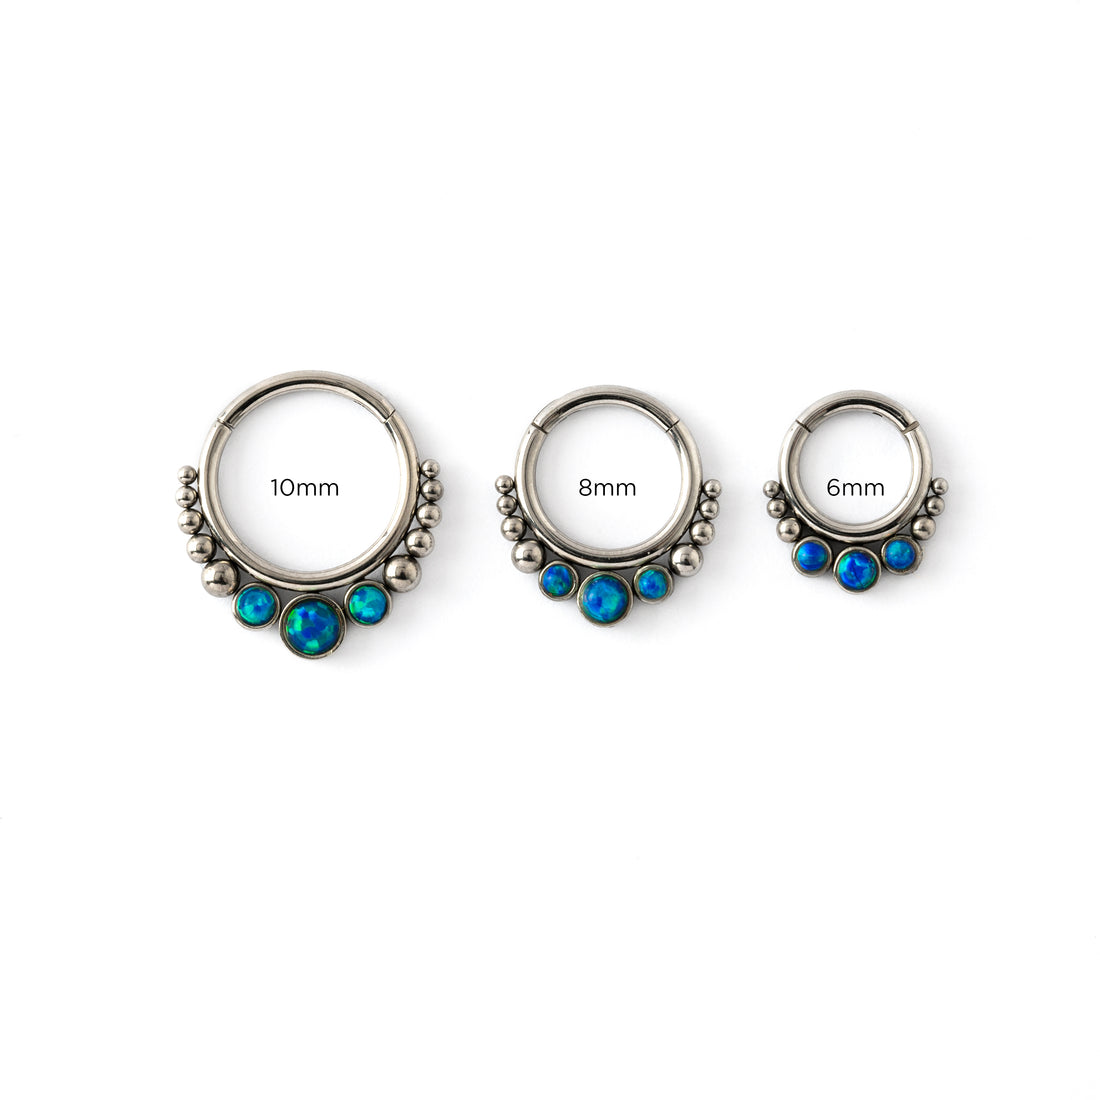 6mm, 8mm, 10mm Siti septum clicker rings trio blue Opals frontal view